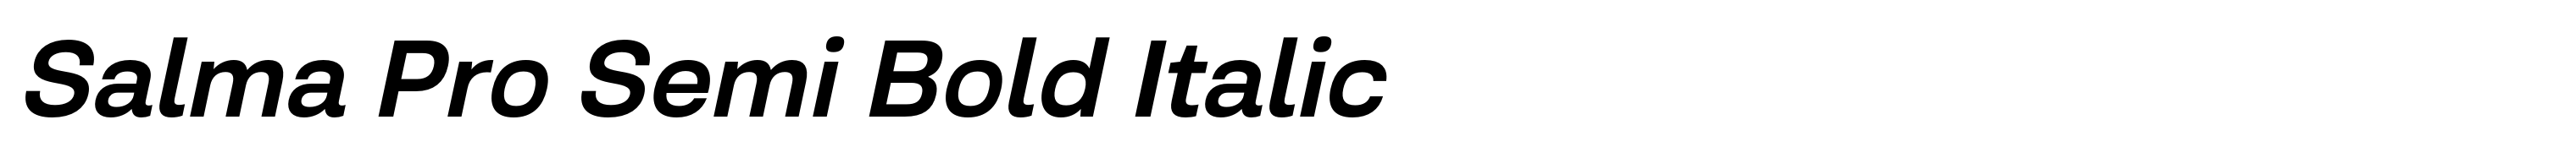 Salma Pro Semi Bold Italic